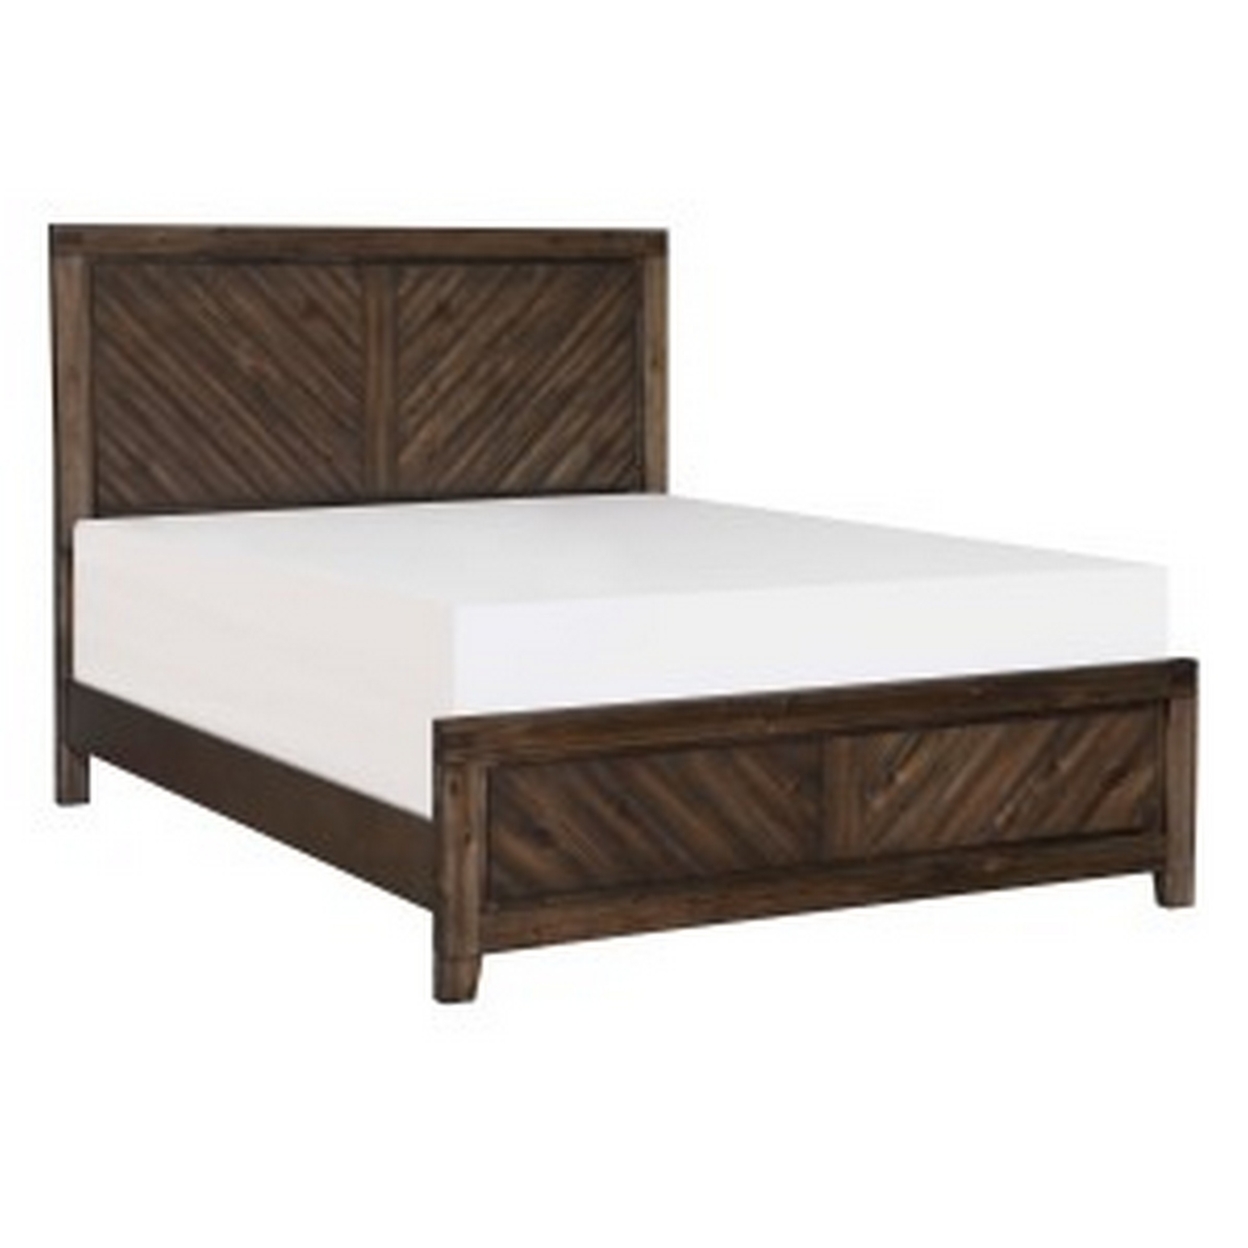 Bitsy Modern Queen Bed, Angled Plank Design, Tapered Legs, Espresso Finish- Saltoro Sherpi